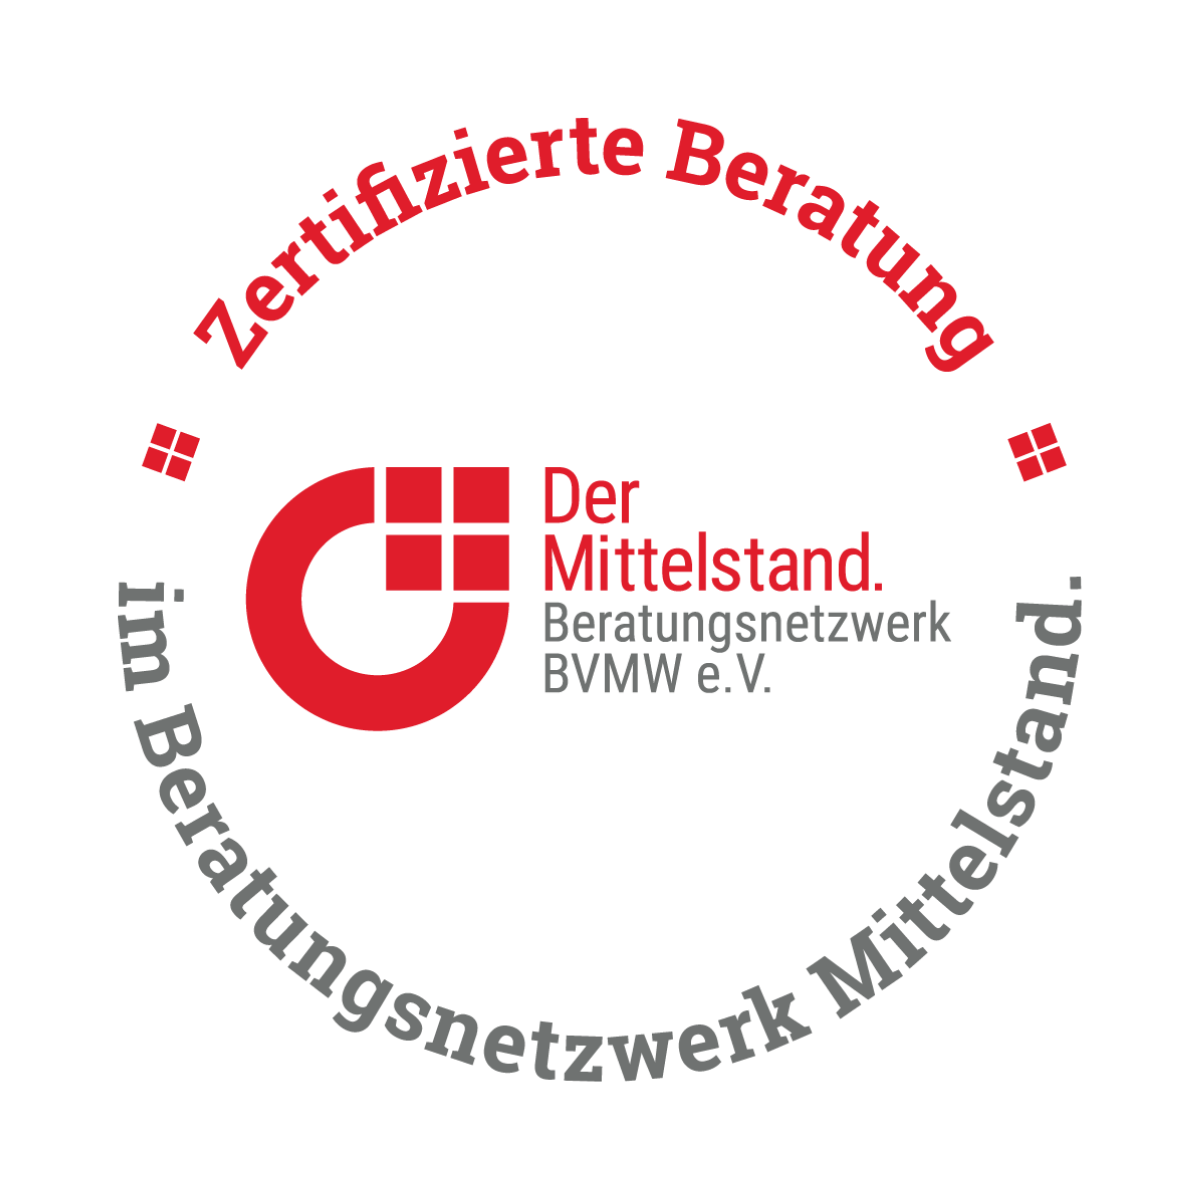 easysub plus GmbH - zertifizierte Beratung BVMW